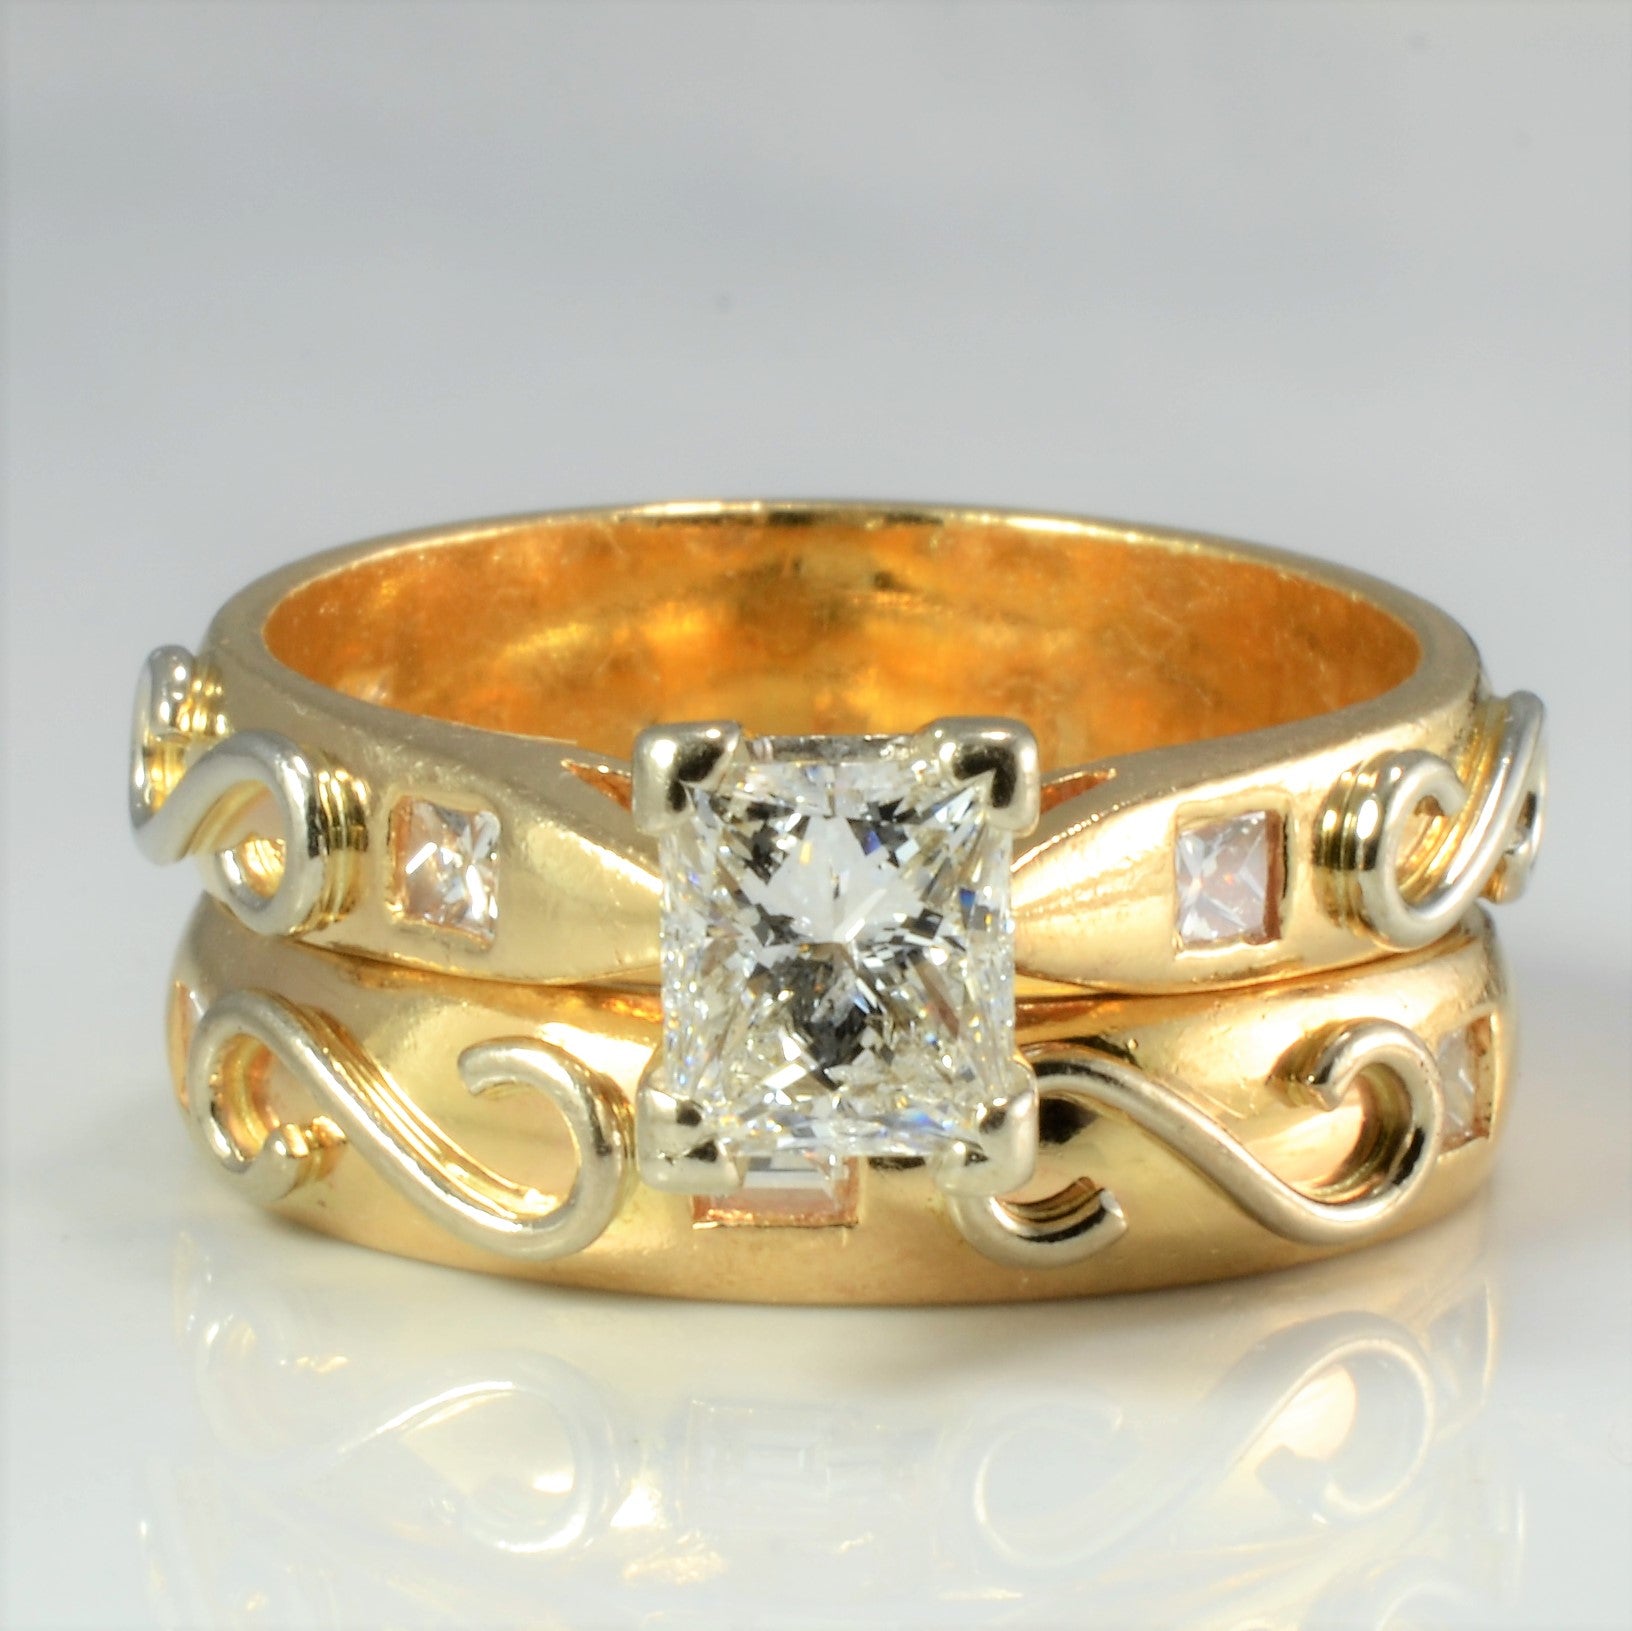 High Set Diamond with Accents Designer Engagement Ring Set | 1.36 ctw, SZ 7.75 |